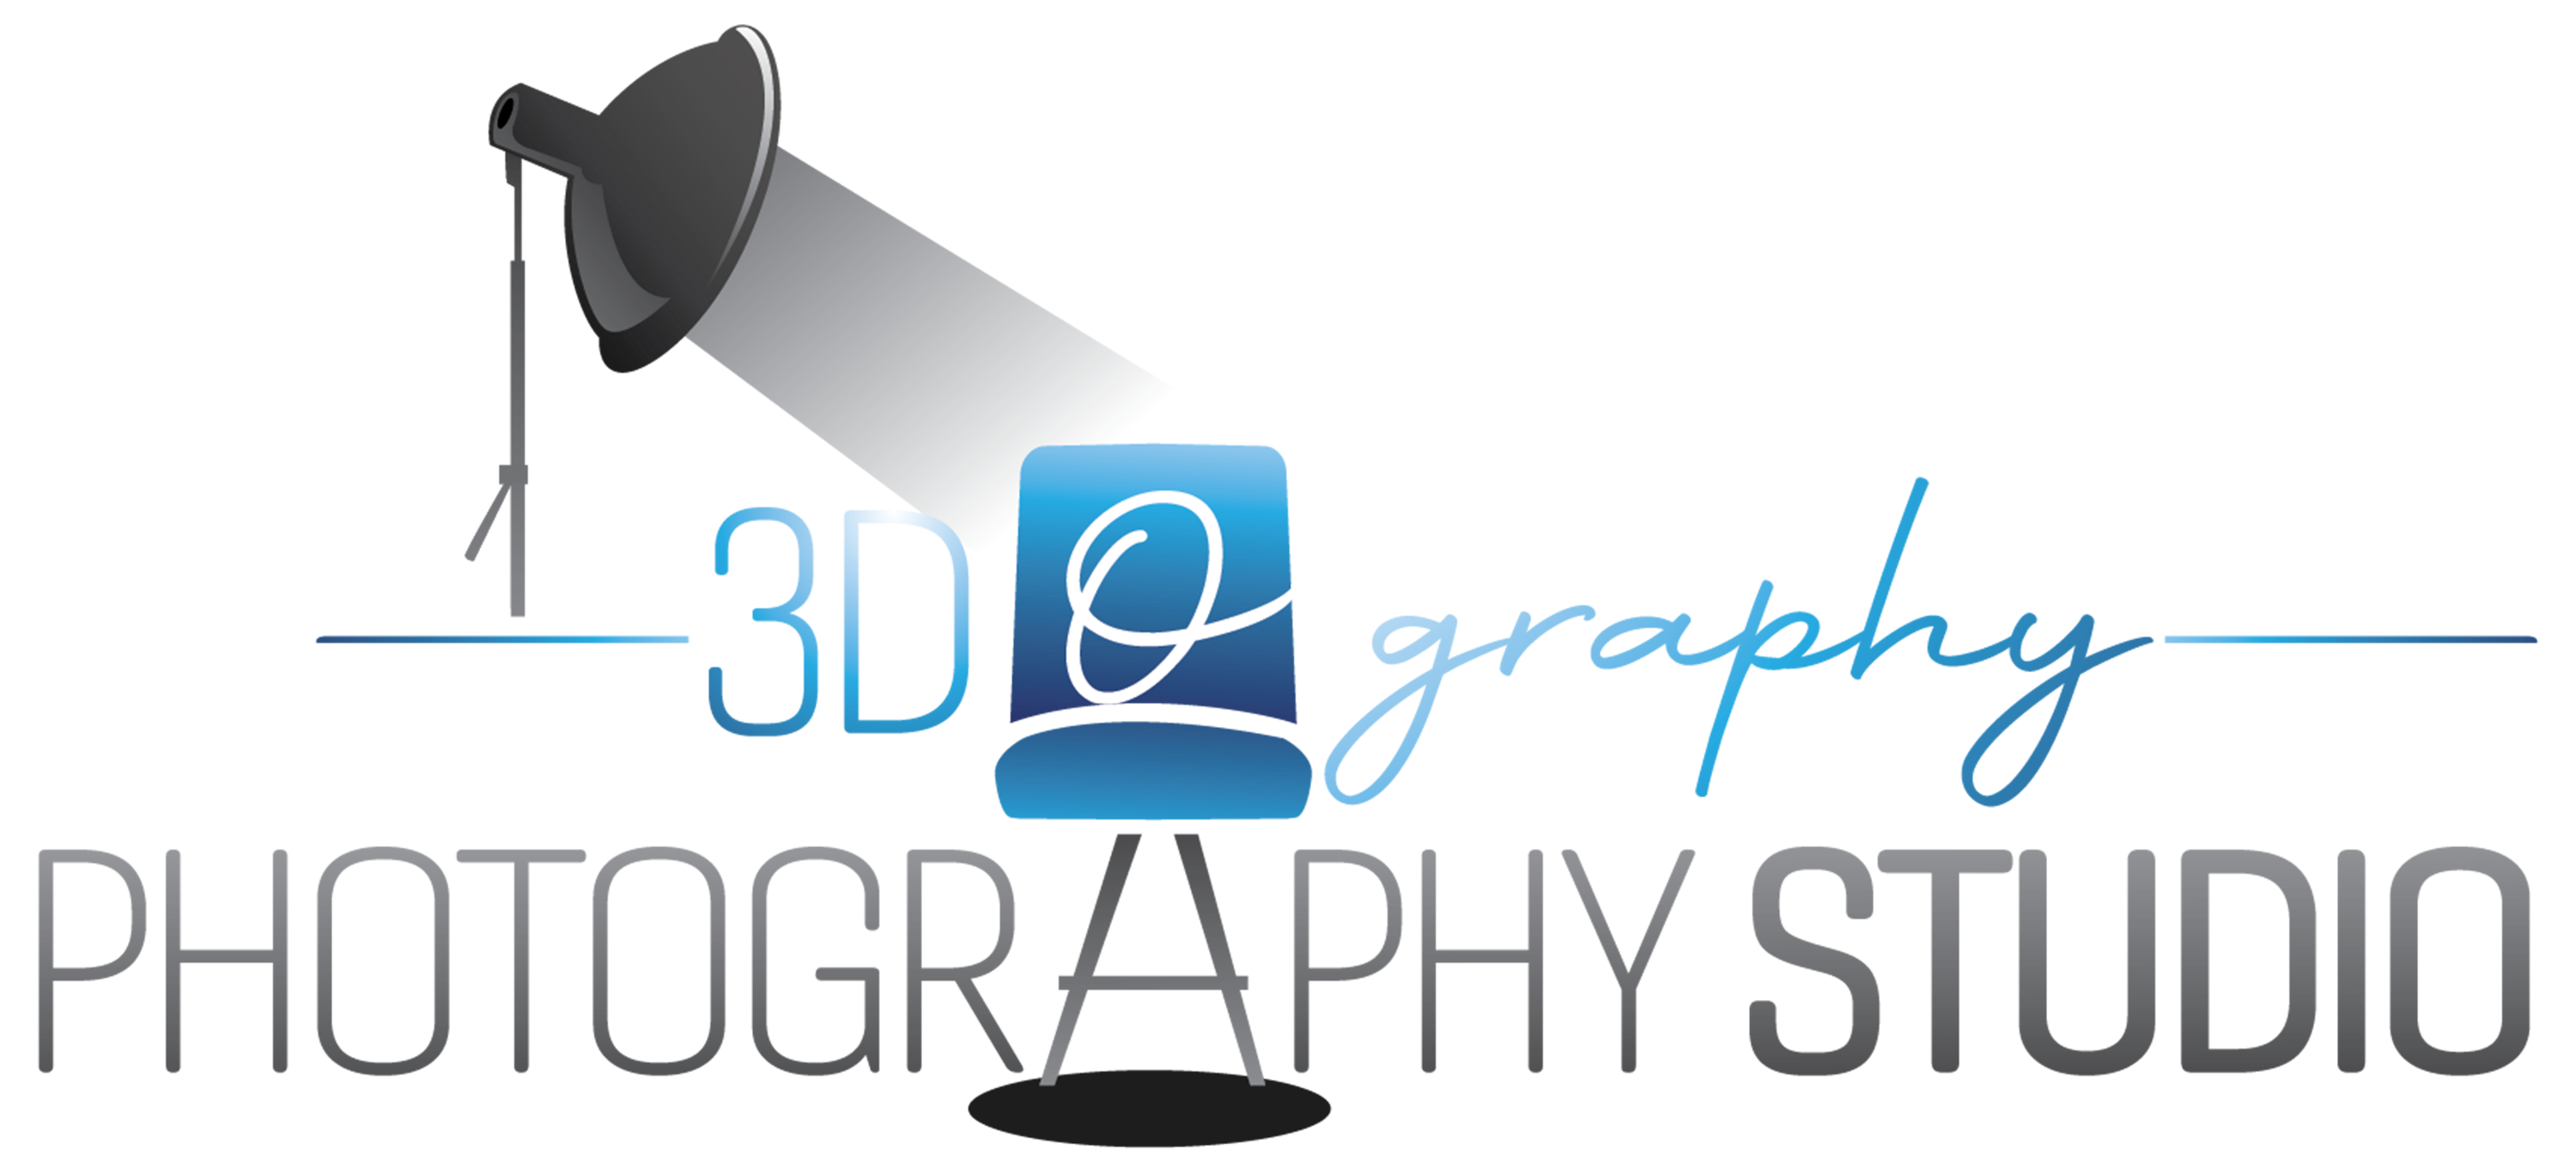 3DOgraphy-Photography-Studio